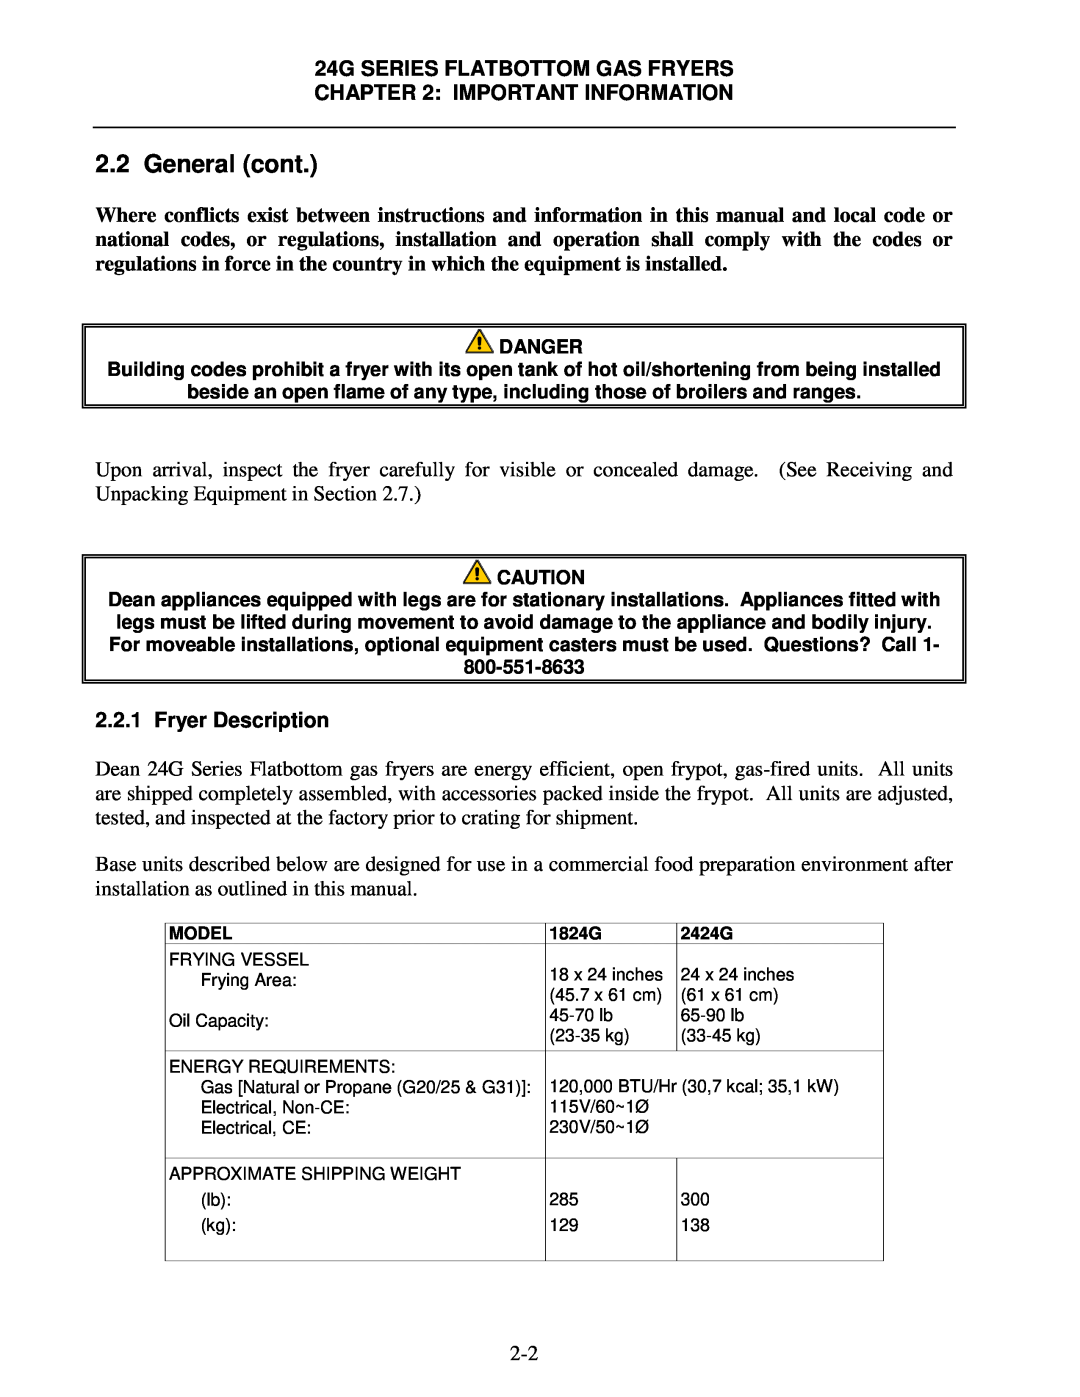 Frymaster 24G Series operation manual General cont, Fryer Description 